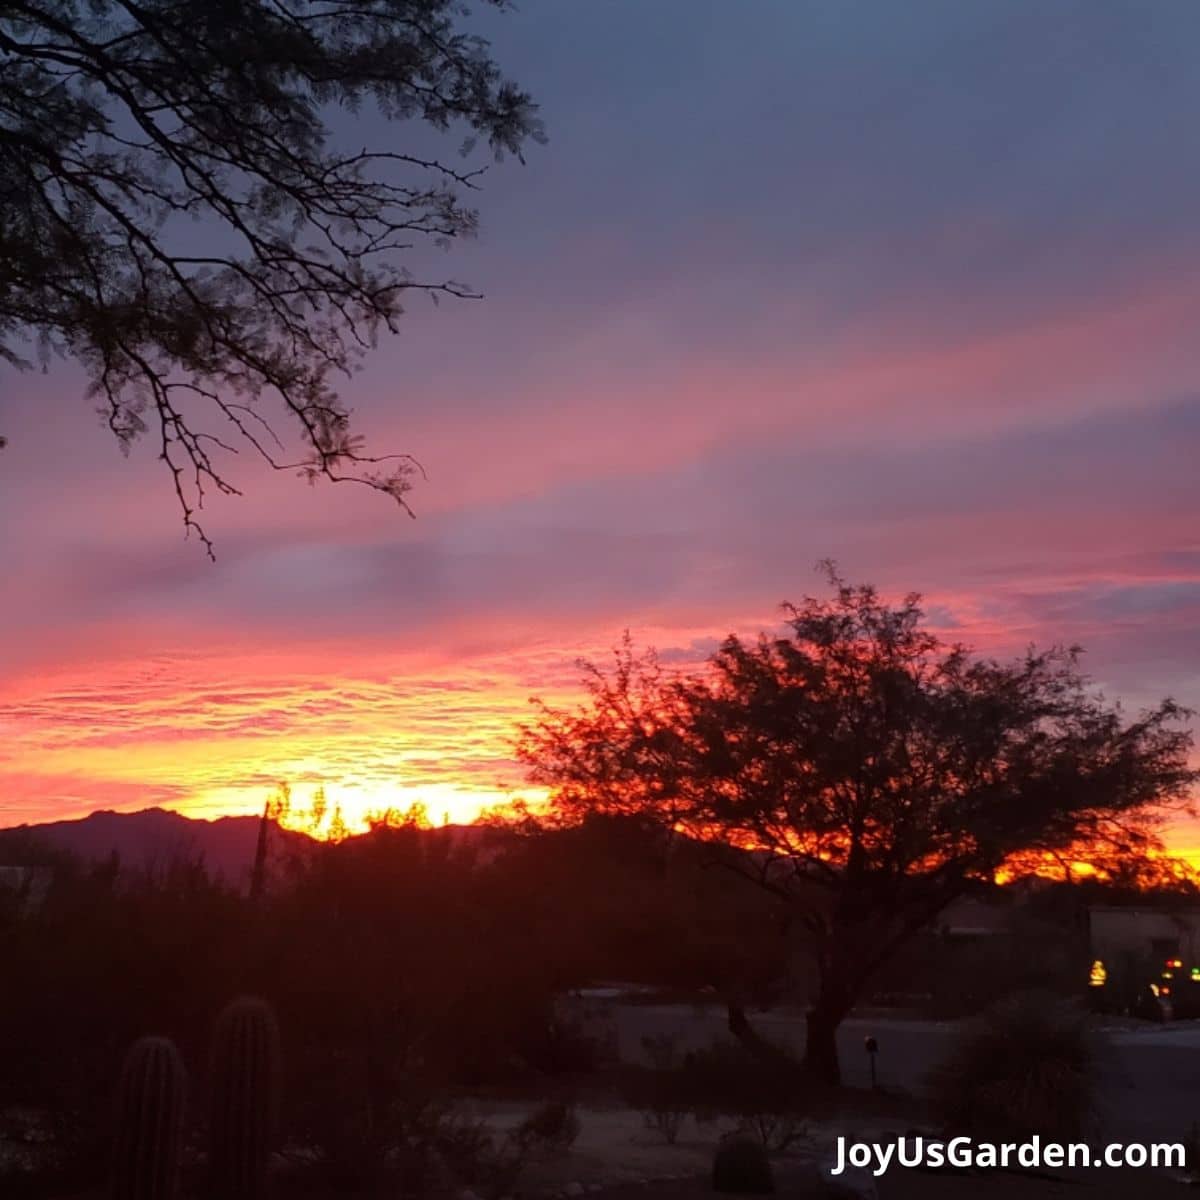 sun setting in sonoran desert, colors of sunset range from yellow, pink, purples, mesquite bush and saguaro cactus in yard